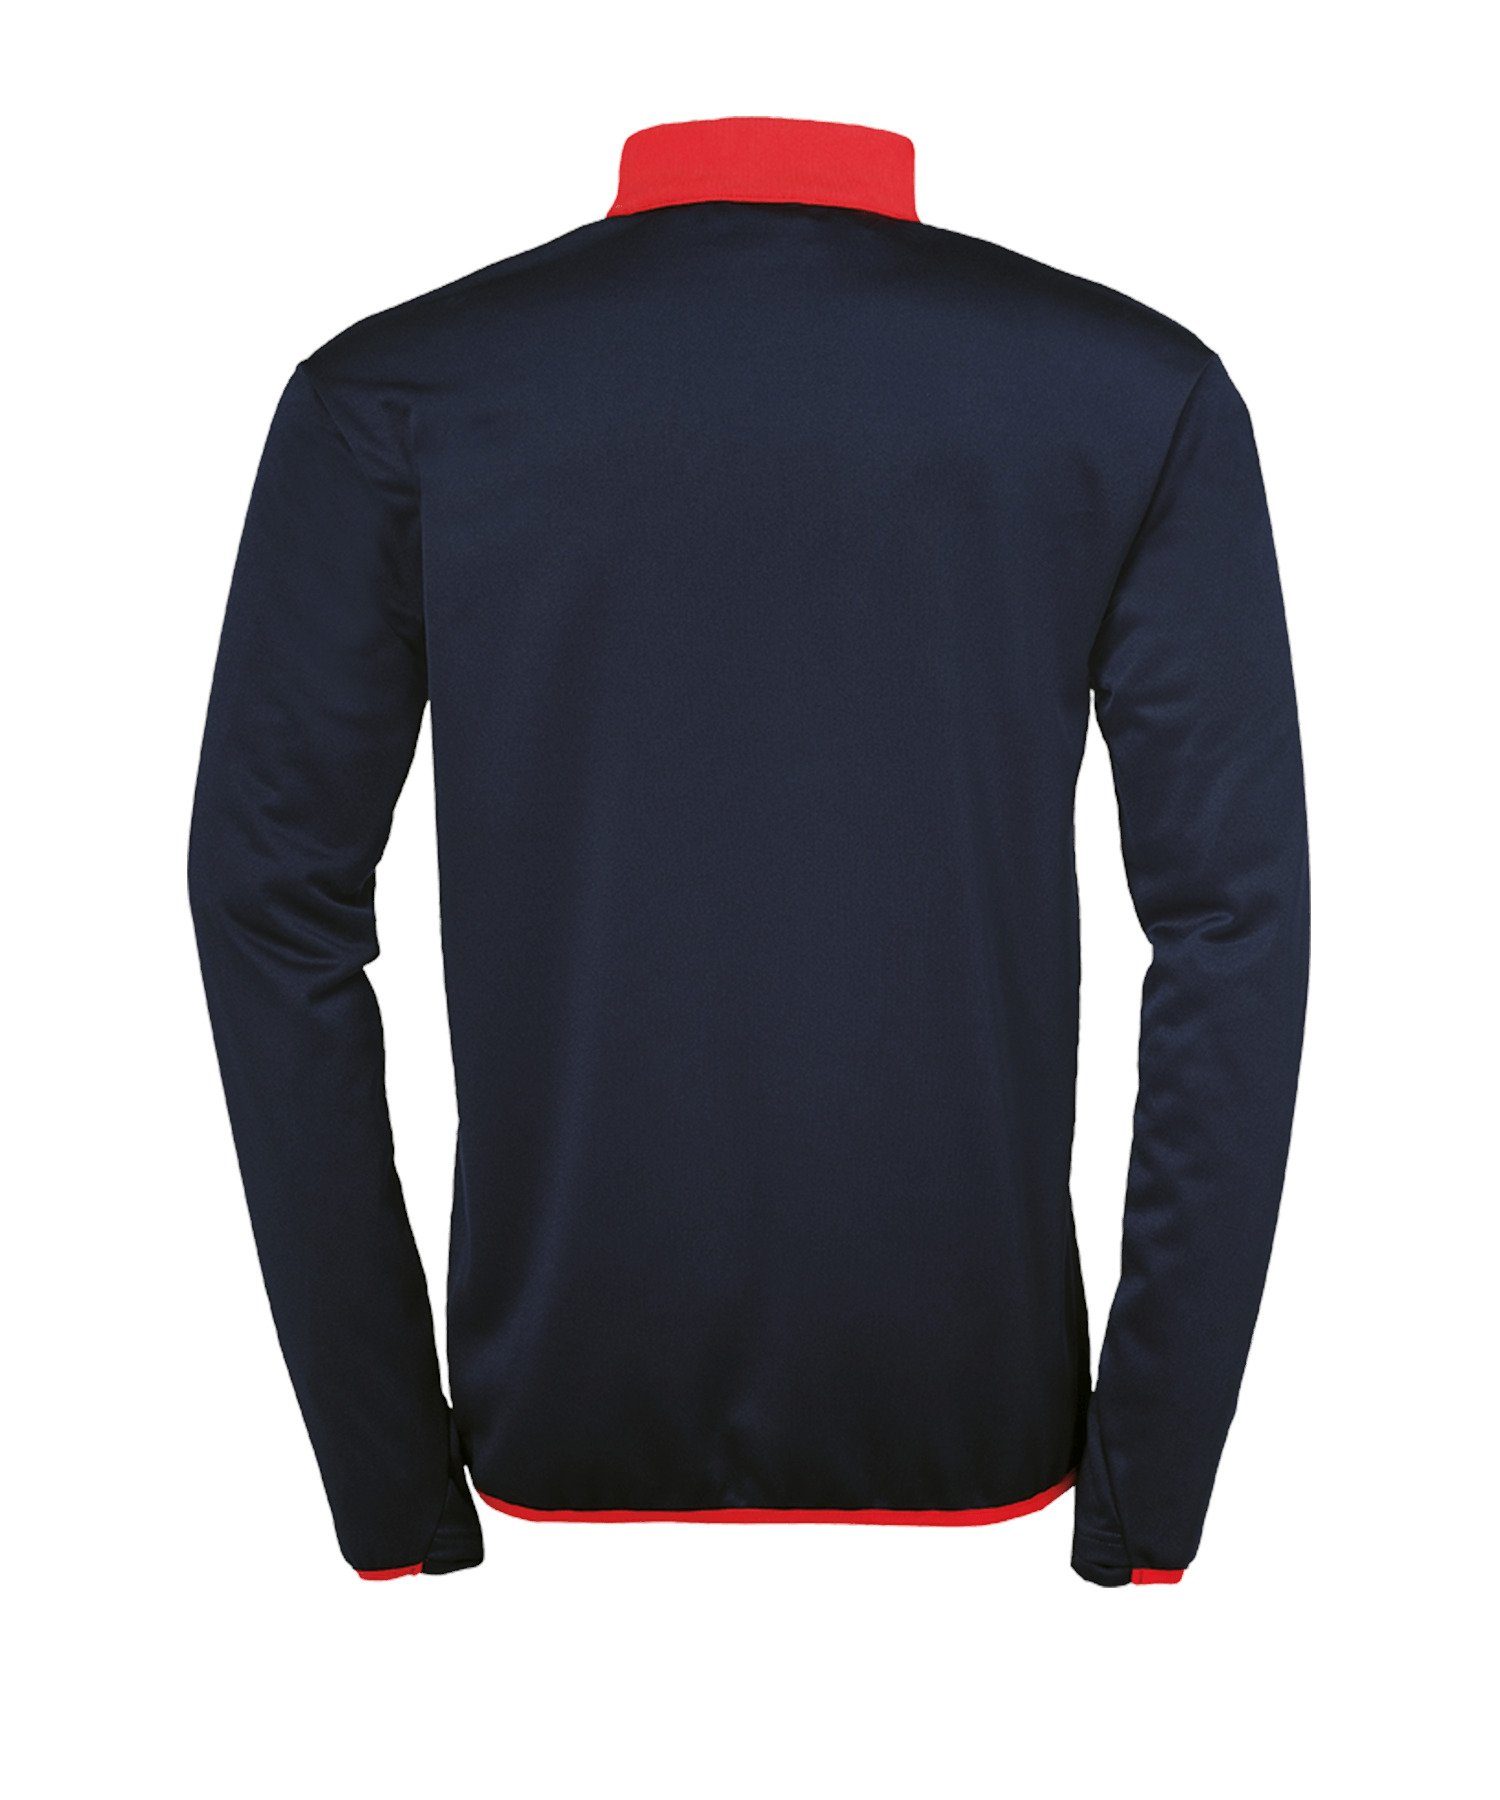 Offense Sweatshirt Ziptop 23 blaurot uhlsport